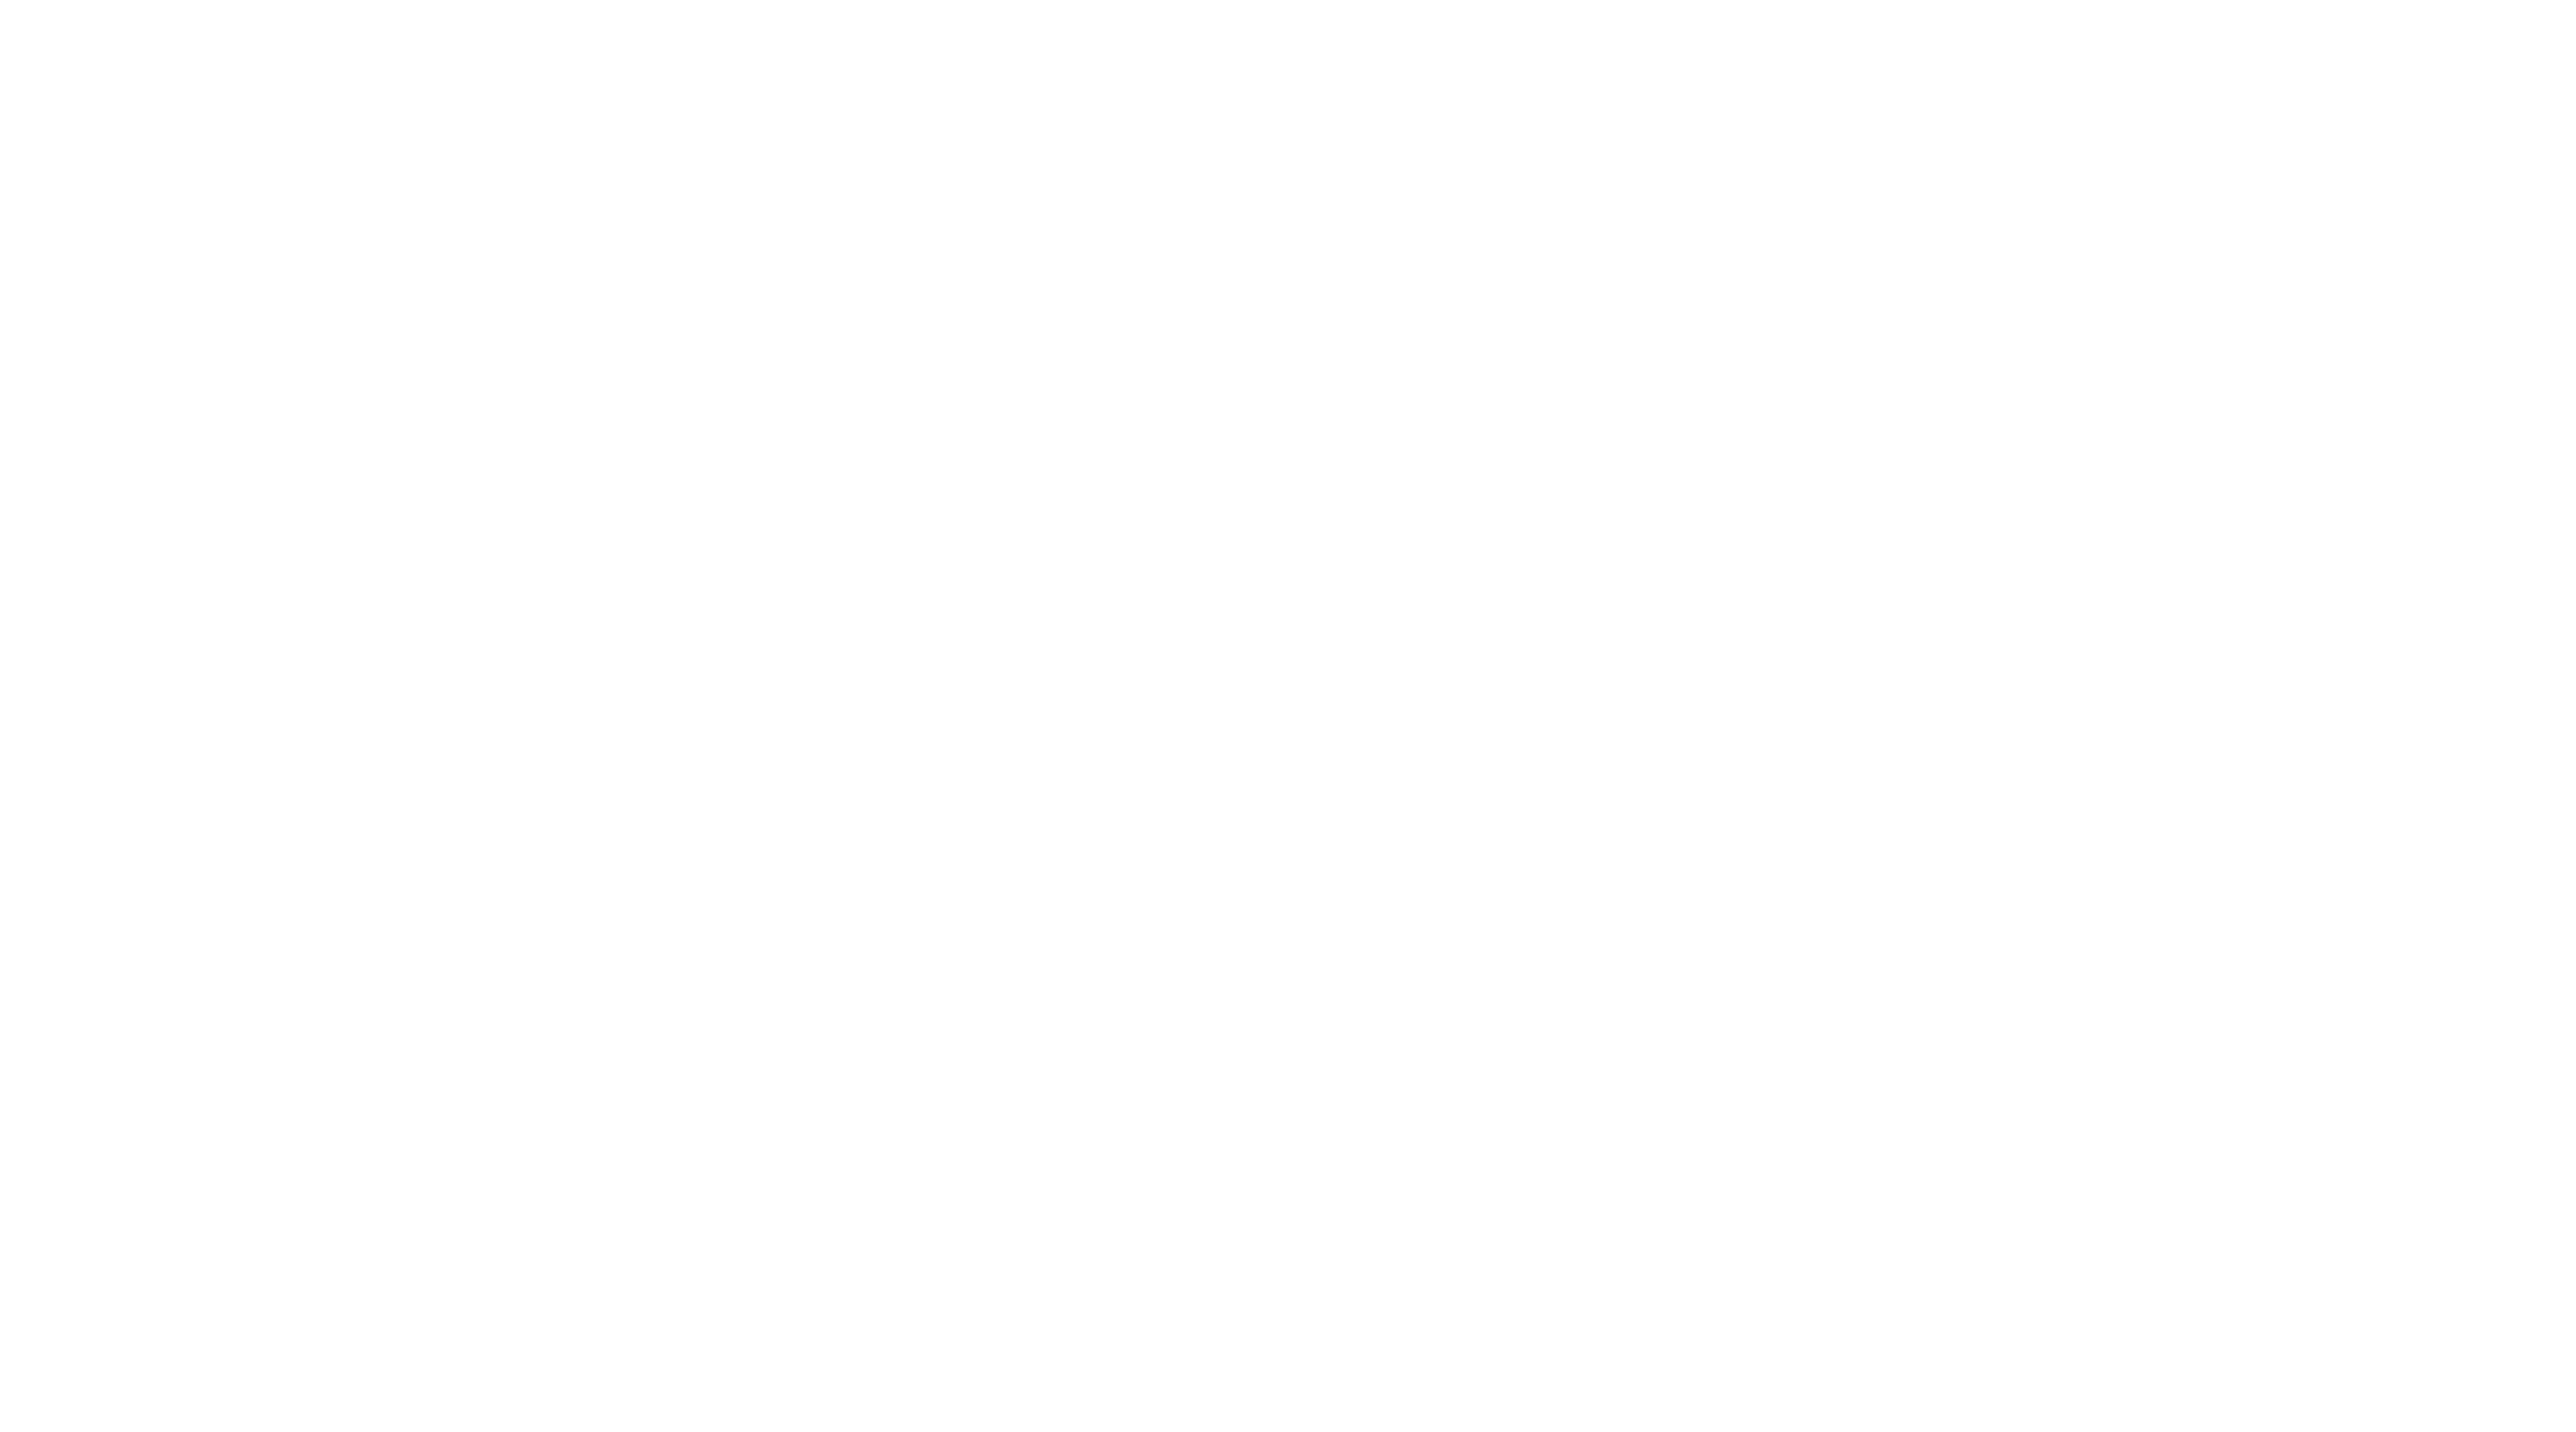 Black and White Waves Logo - Waves Live Logo